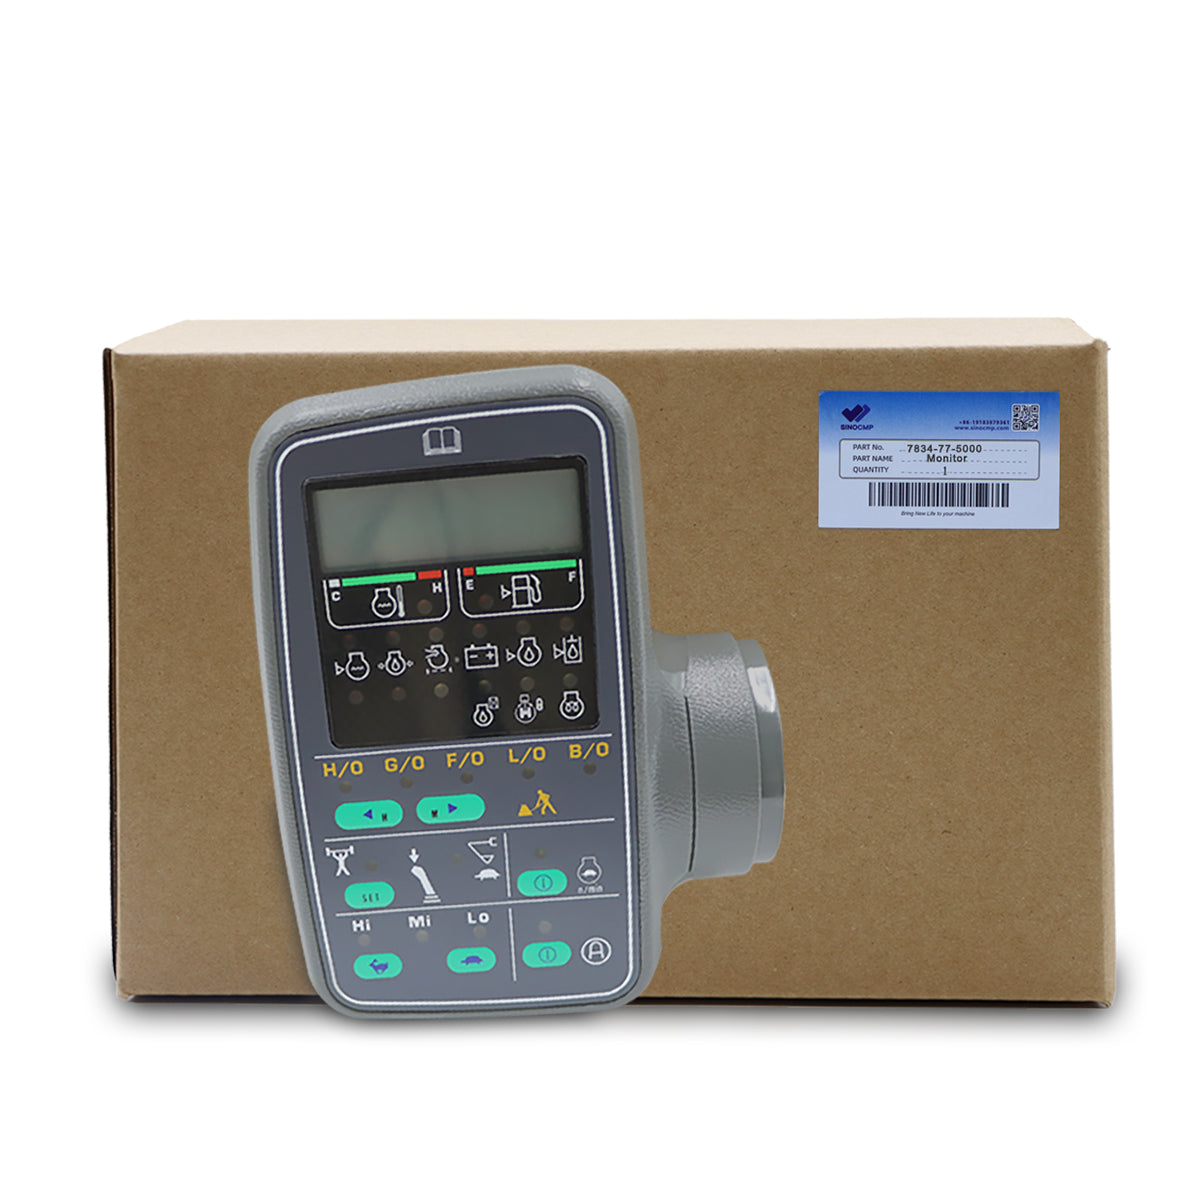 7834-77-5000 7834-77-9000 Monitor Display Panel for Komatsu PC800-6 PC750-6 - Sinocmp